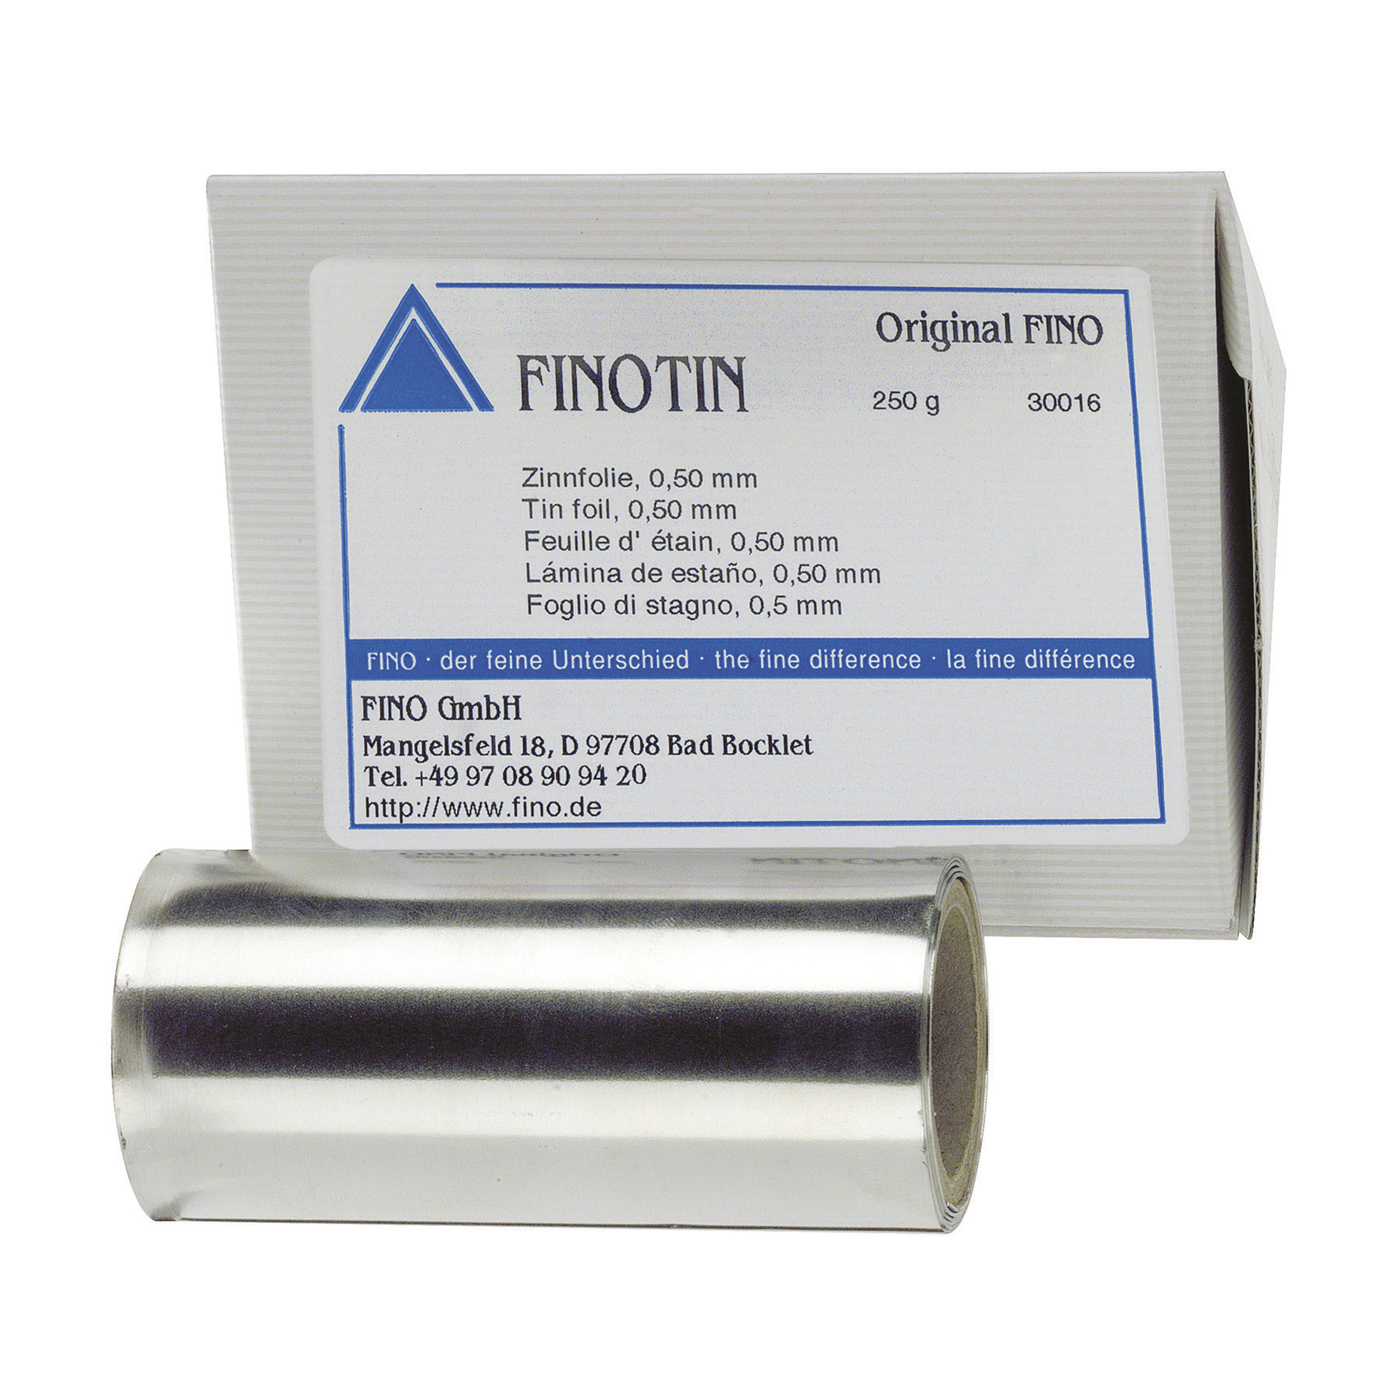 FINOTIN Tin Foil, 0.50 mm - 250 g